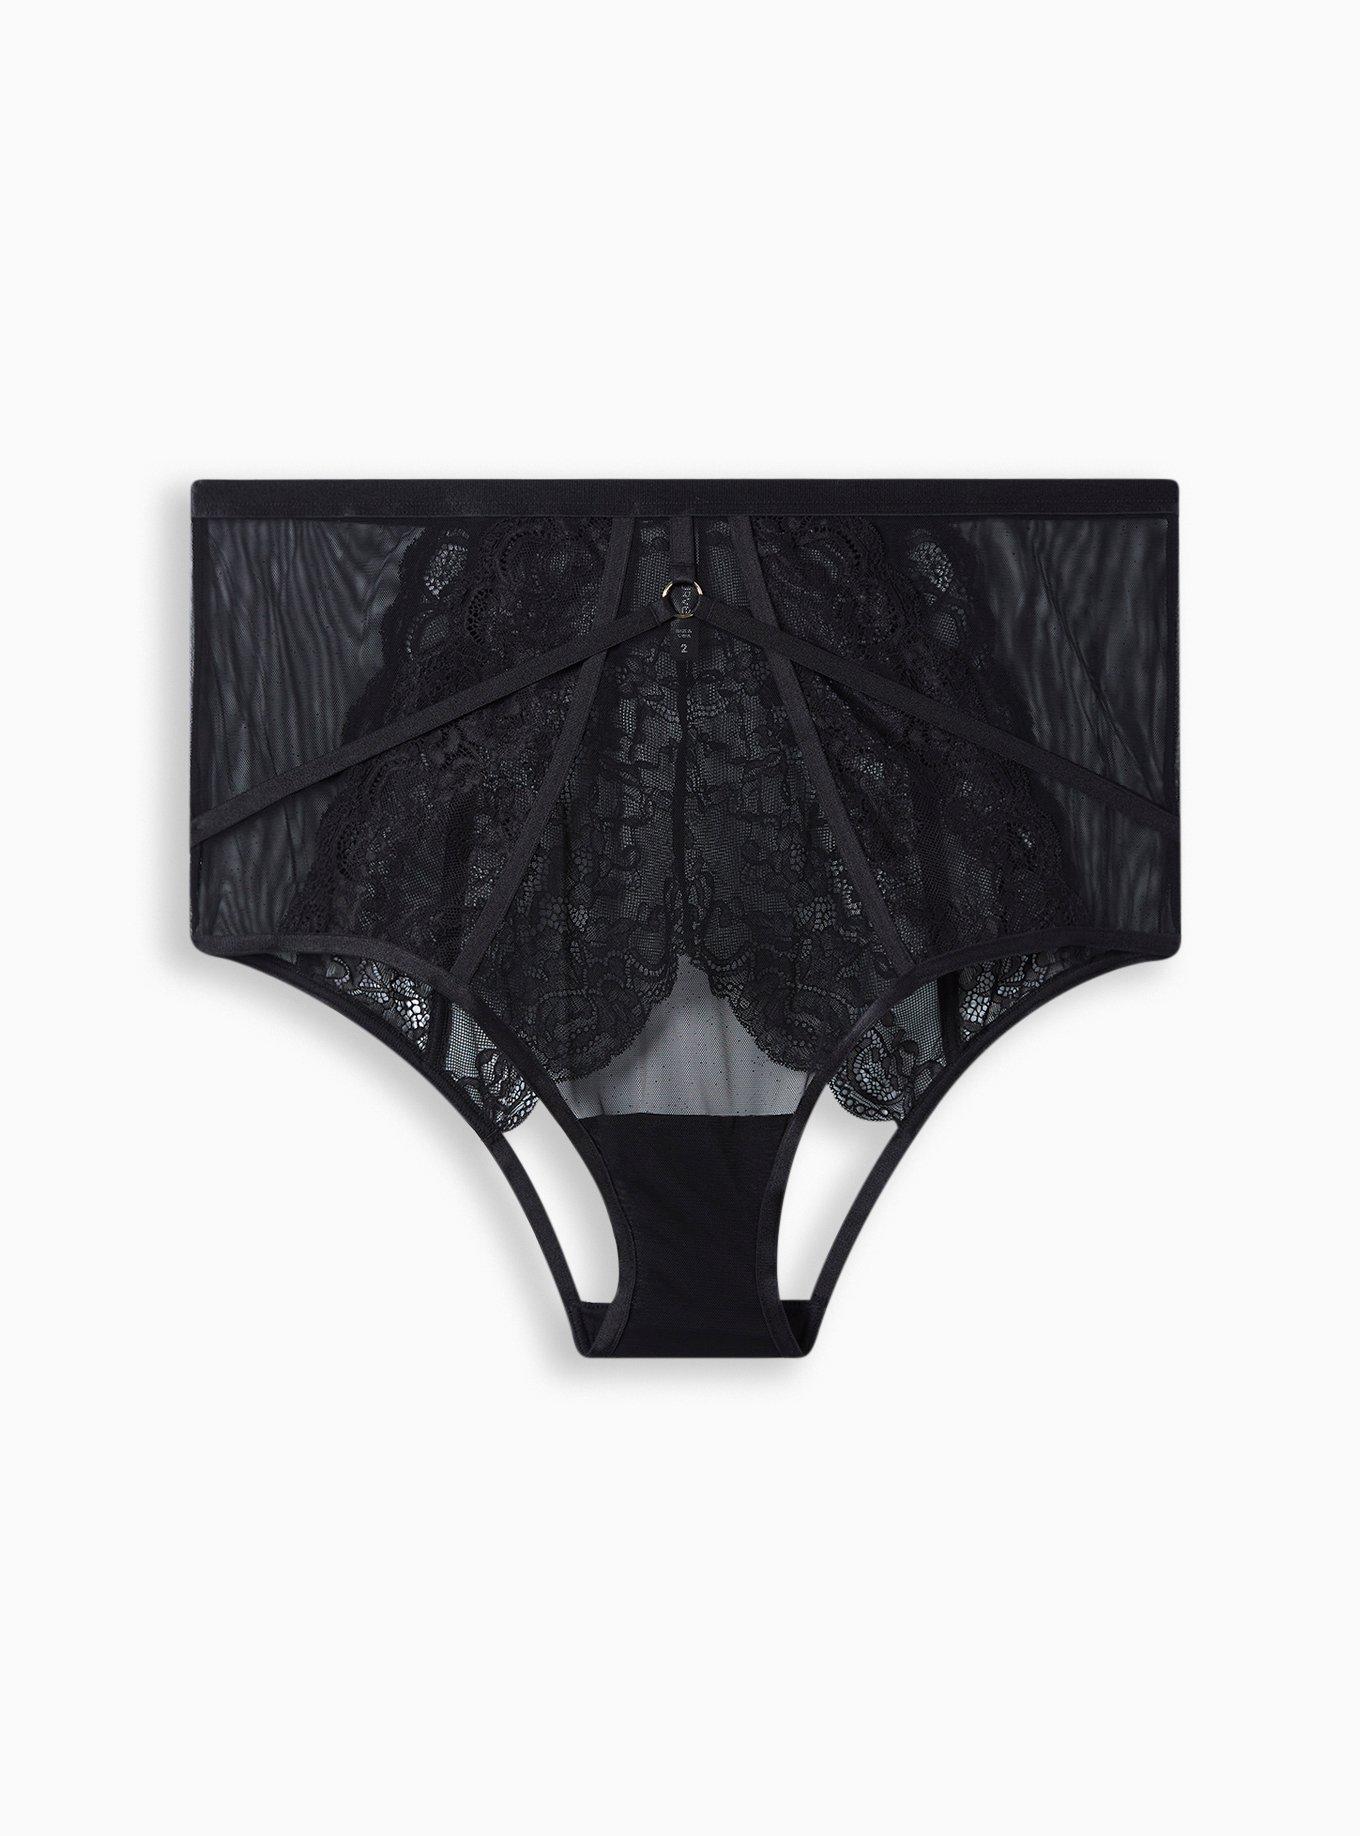 Women's Sexy Thong Print Low Rise Fun Flirty Boy Short Cheeky Panties  Underwear